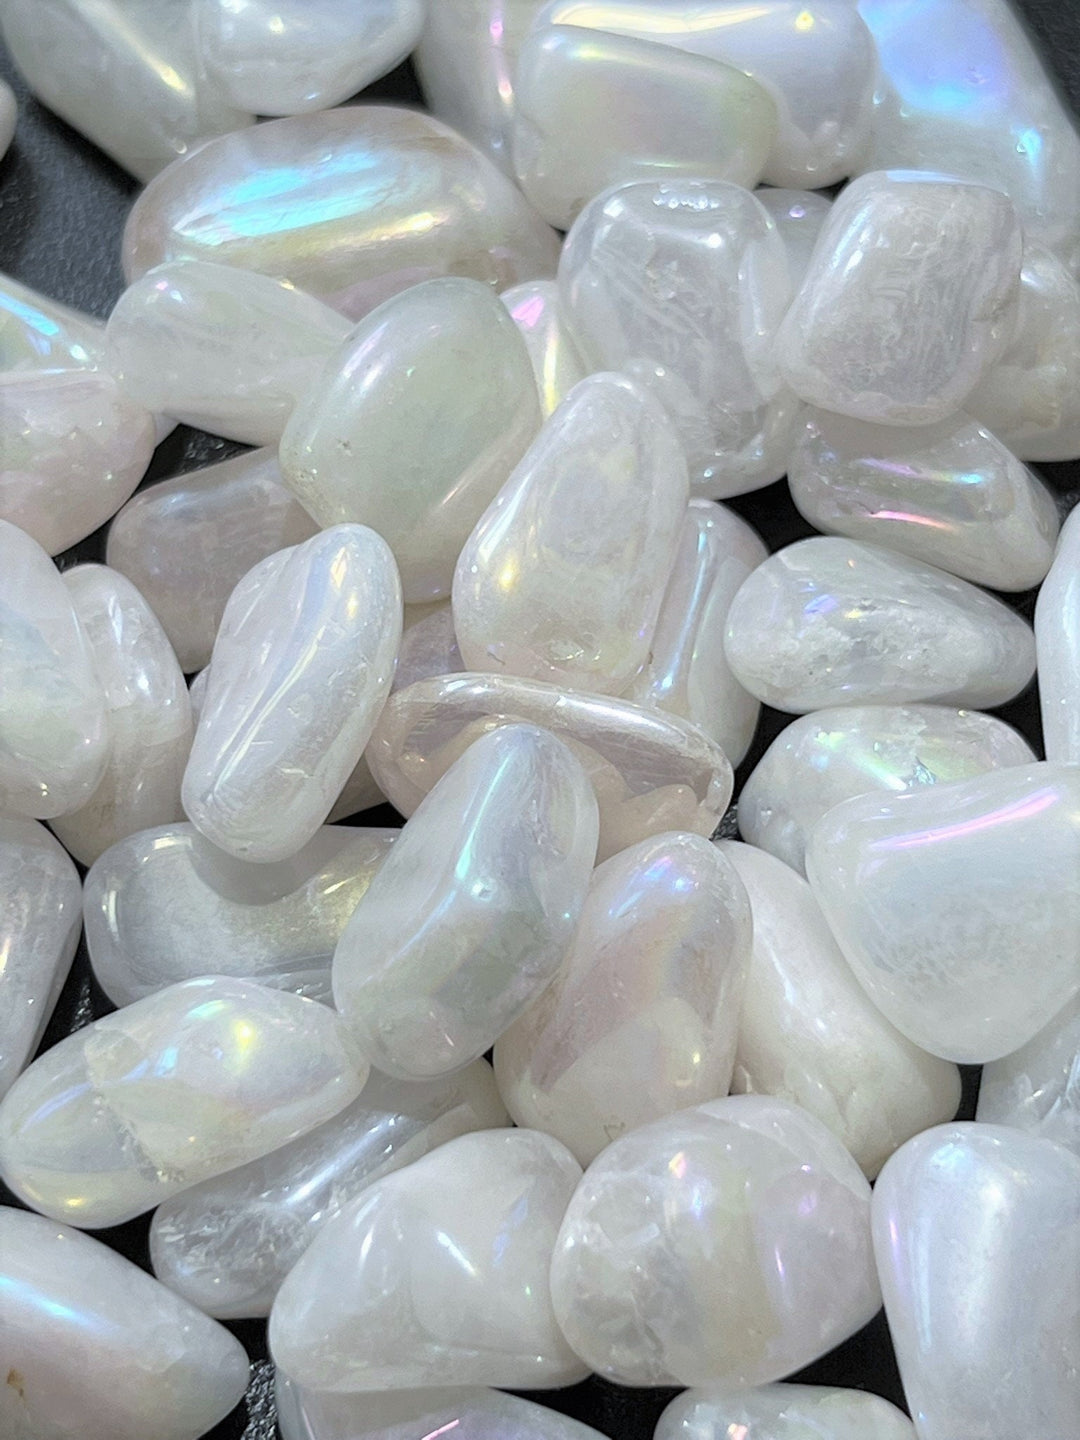 Bulk Wholesale Lot 1 LB - Aura Quartz - One Pound Tumbled Polished Stones Natural Gemstones Crystals